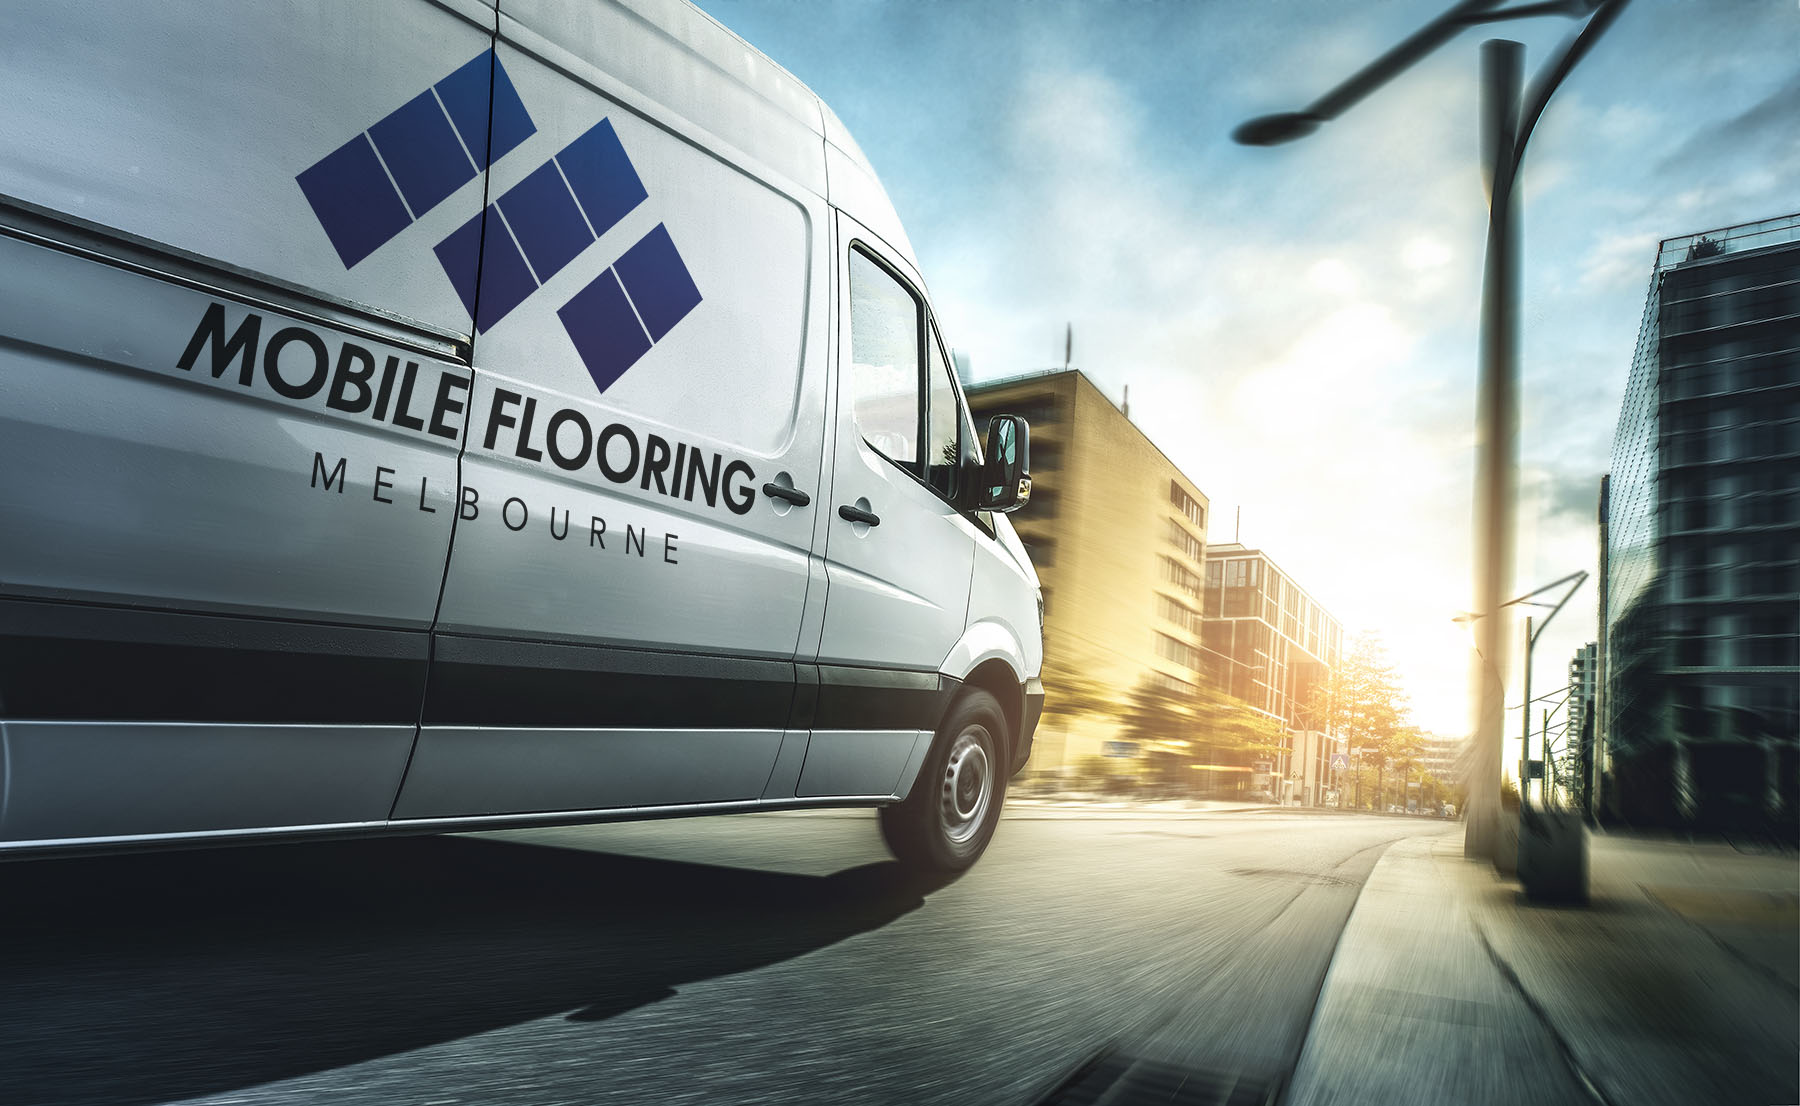 Mobile Flooring Melbourne